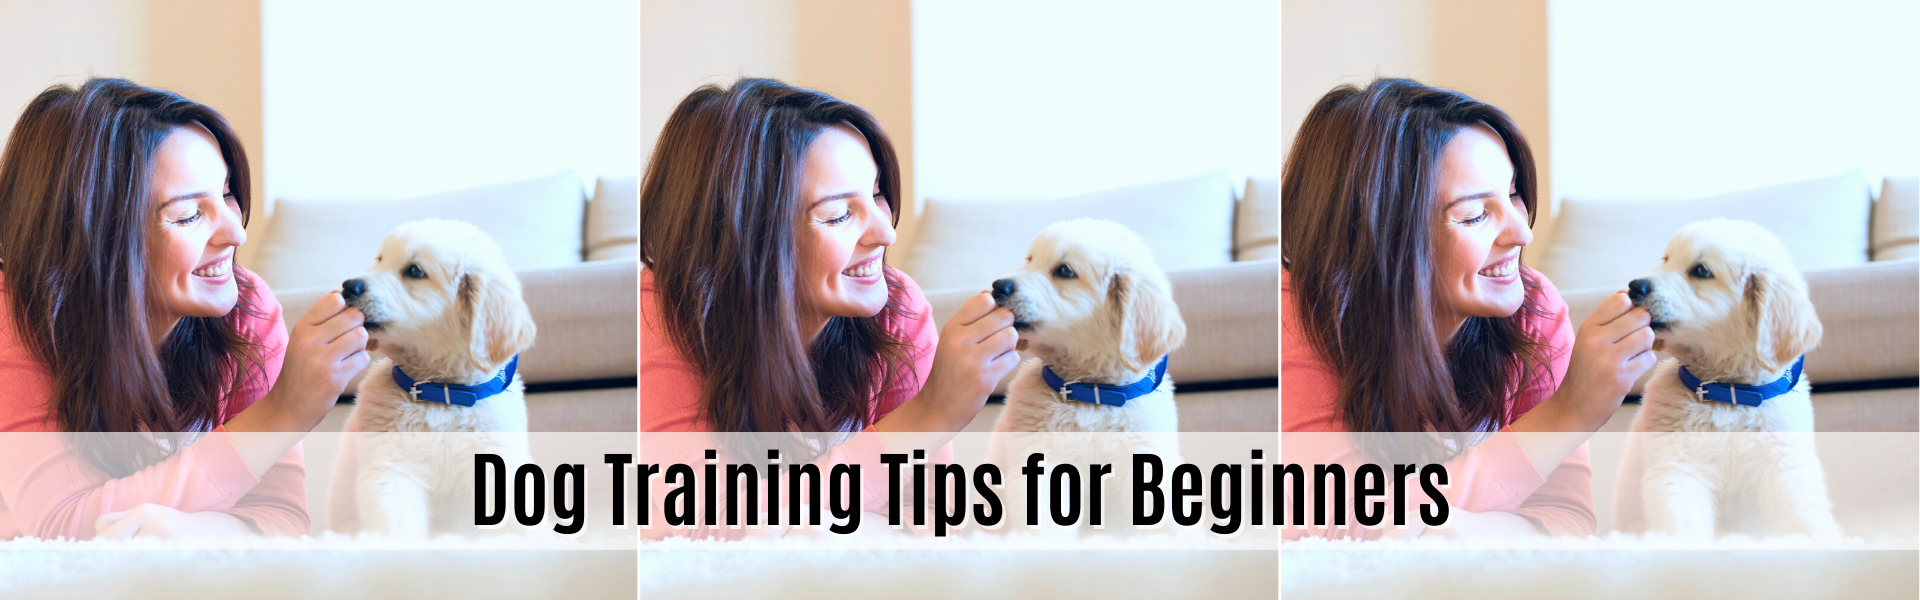 Dog Training Tips for Beginners